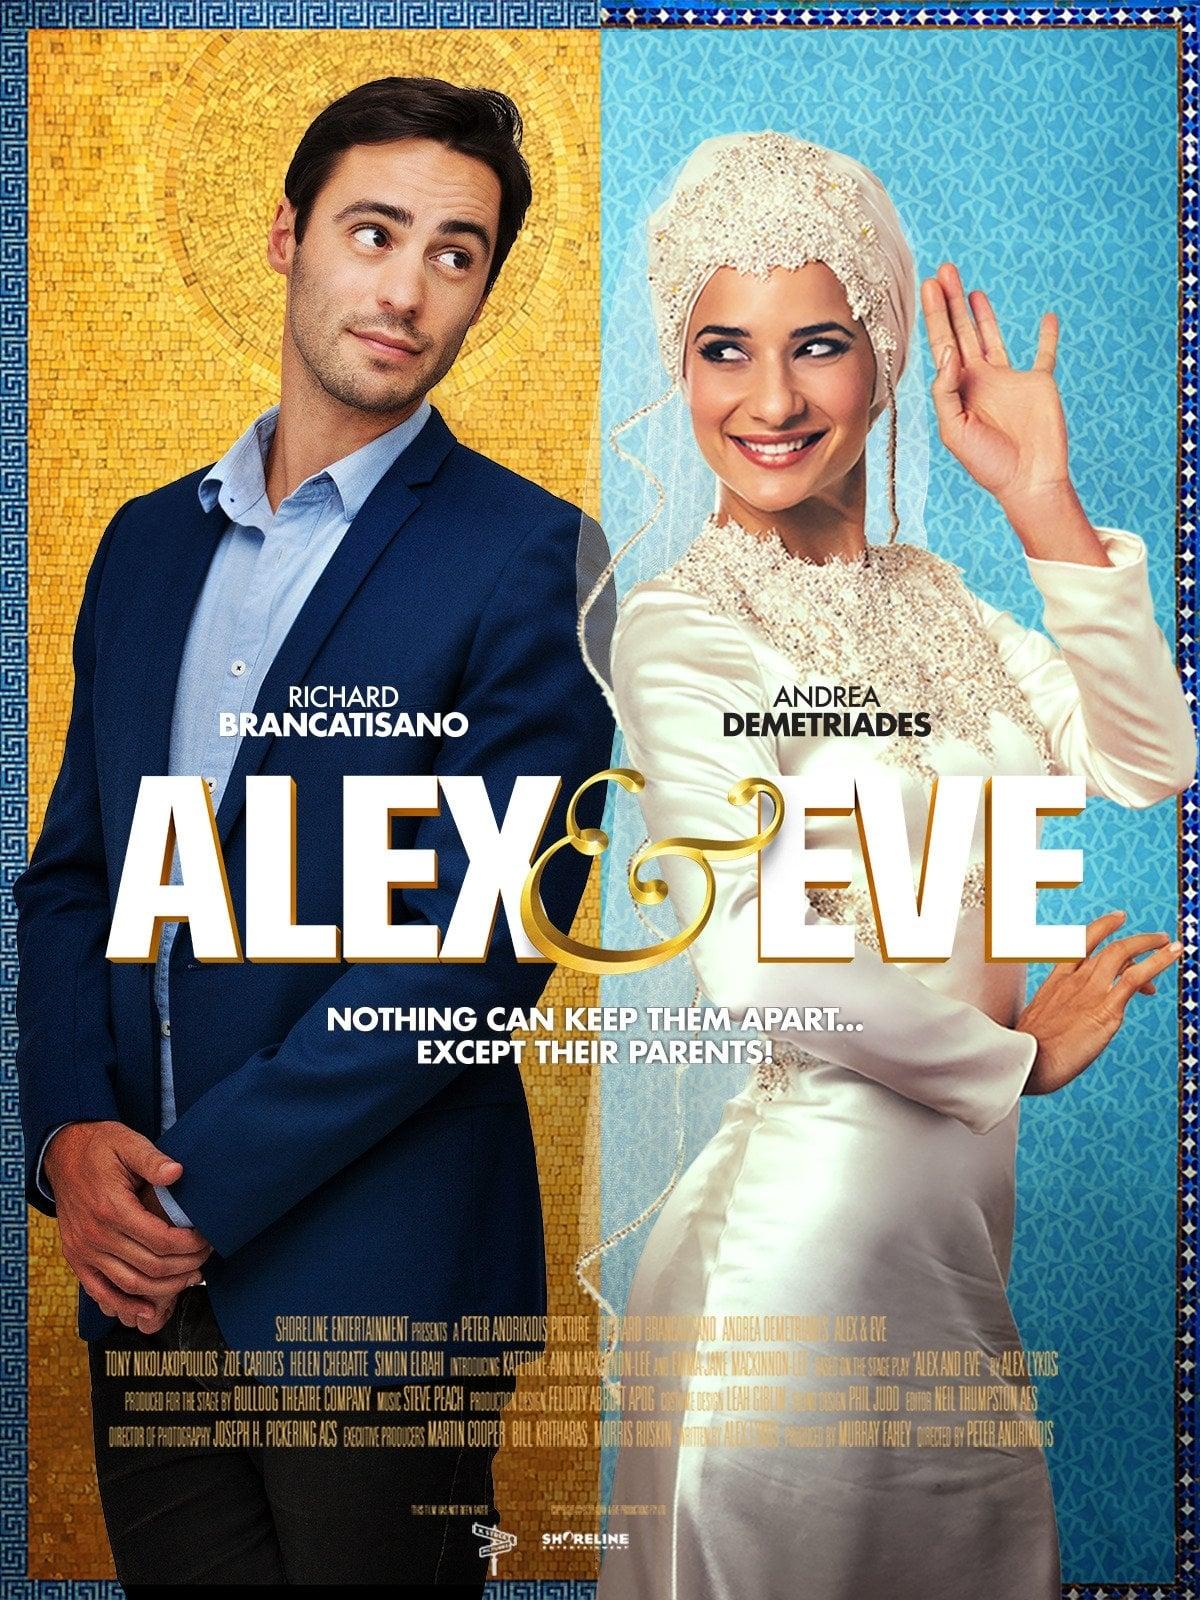 Alex & Eve poster